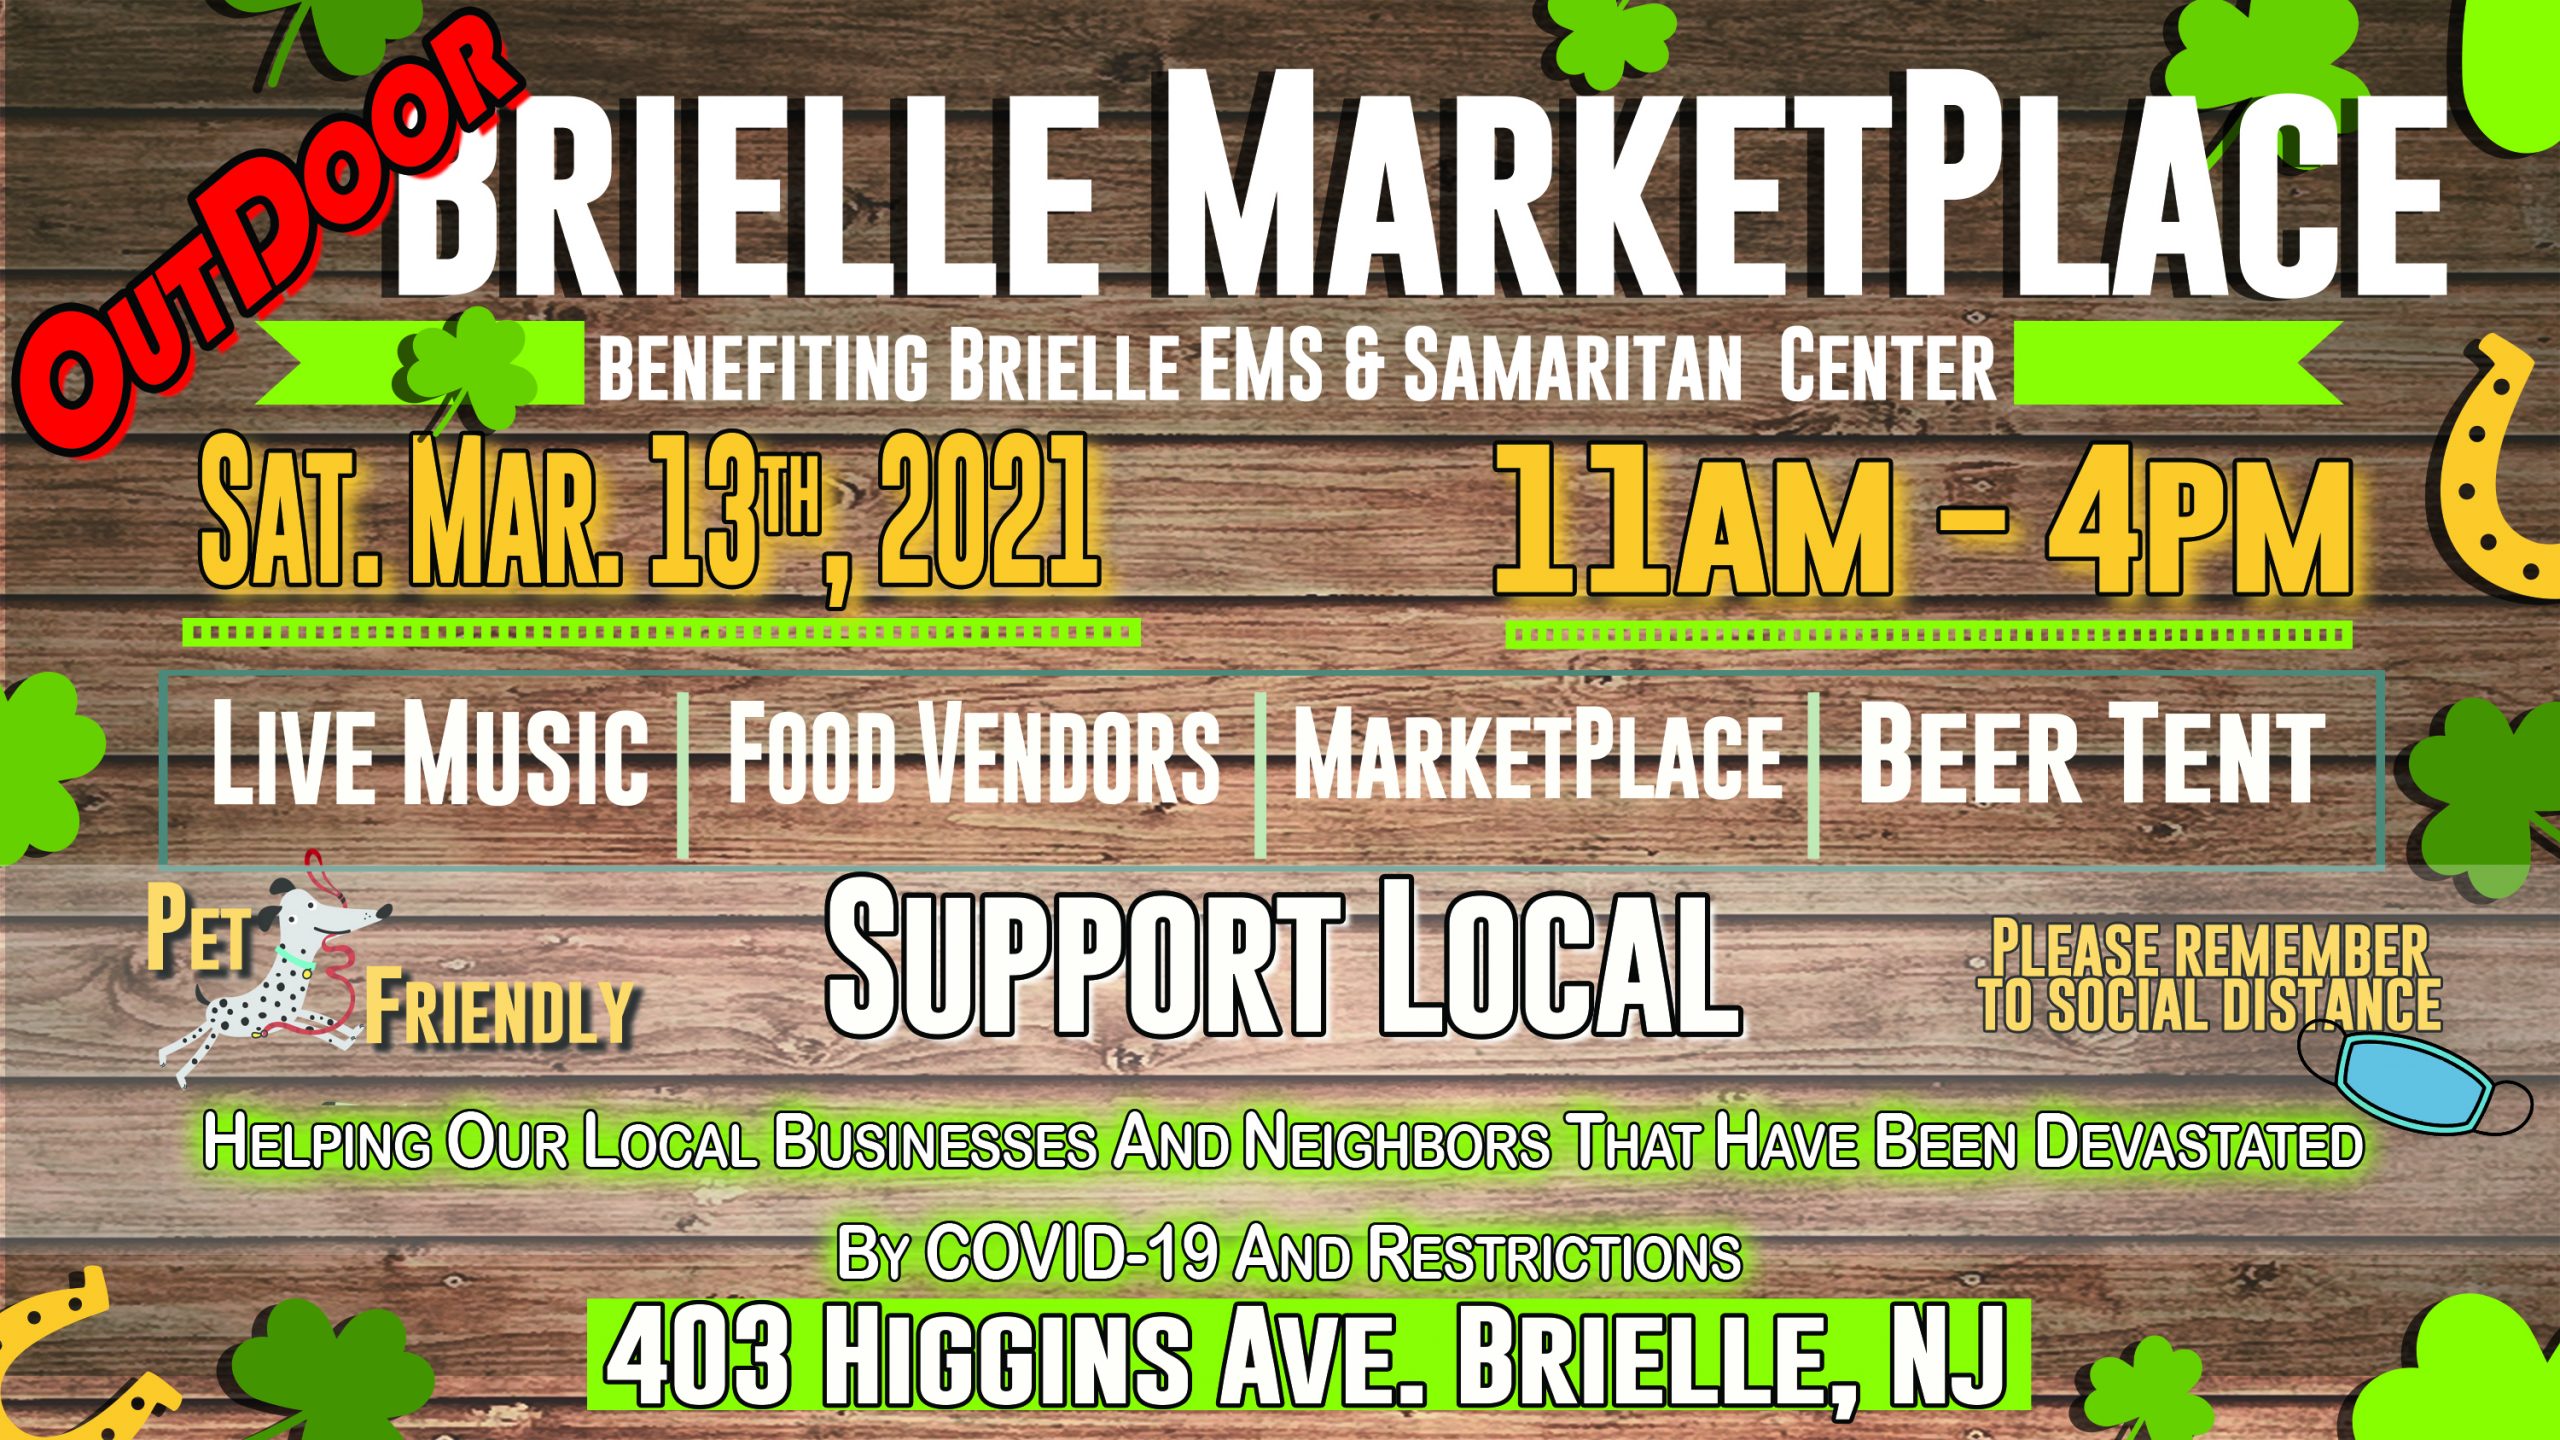 Outdoor Brielle MarketPlace. Benefiting Brielle EMS & Samaritan Center. Sat. Mar. 13, 20210 11am - 4pm. 403 Higgins Ave. Brielle, NJ